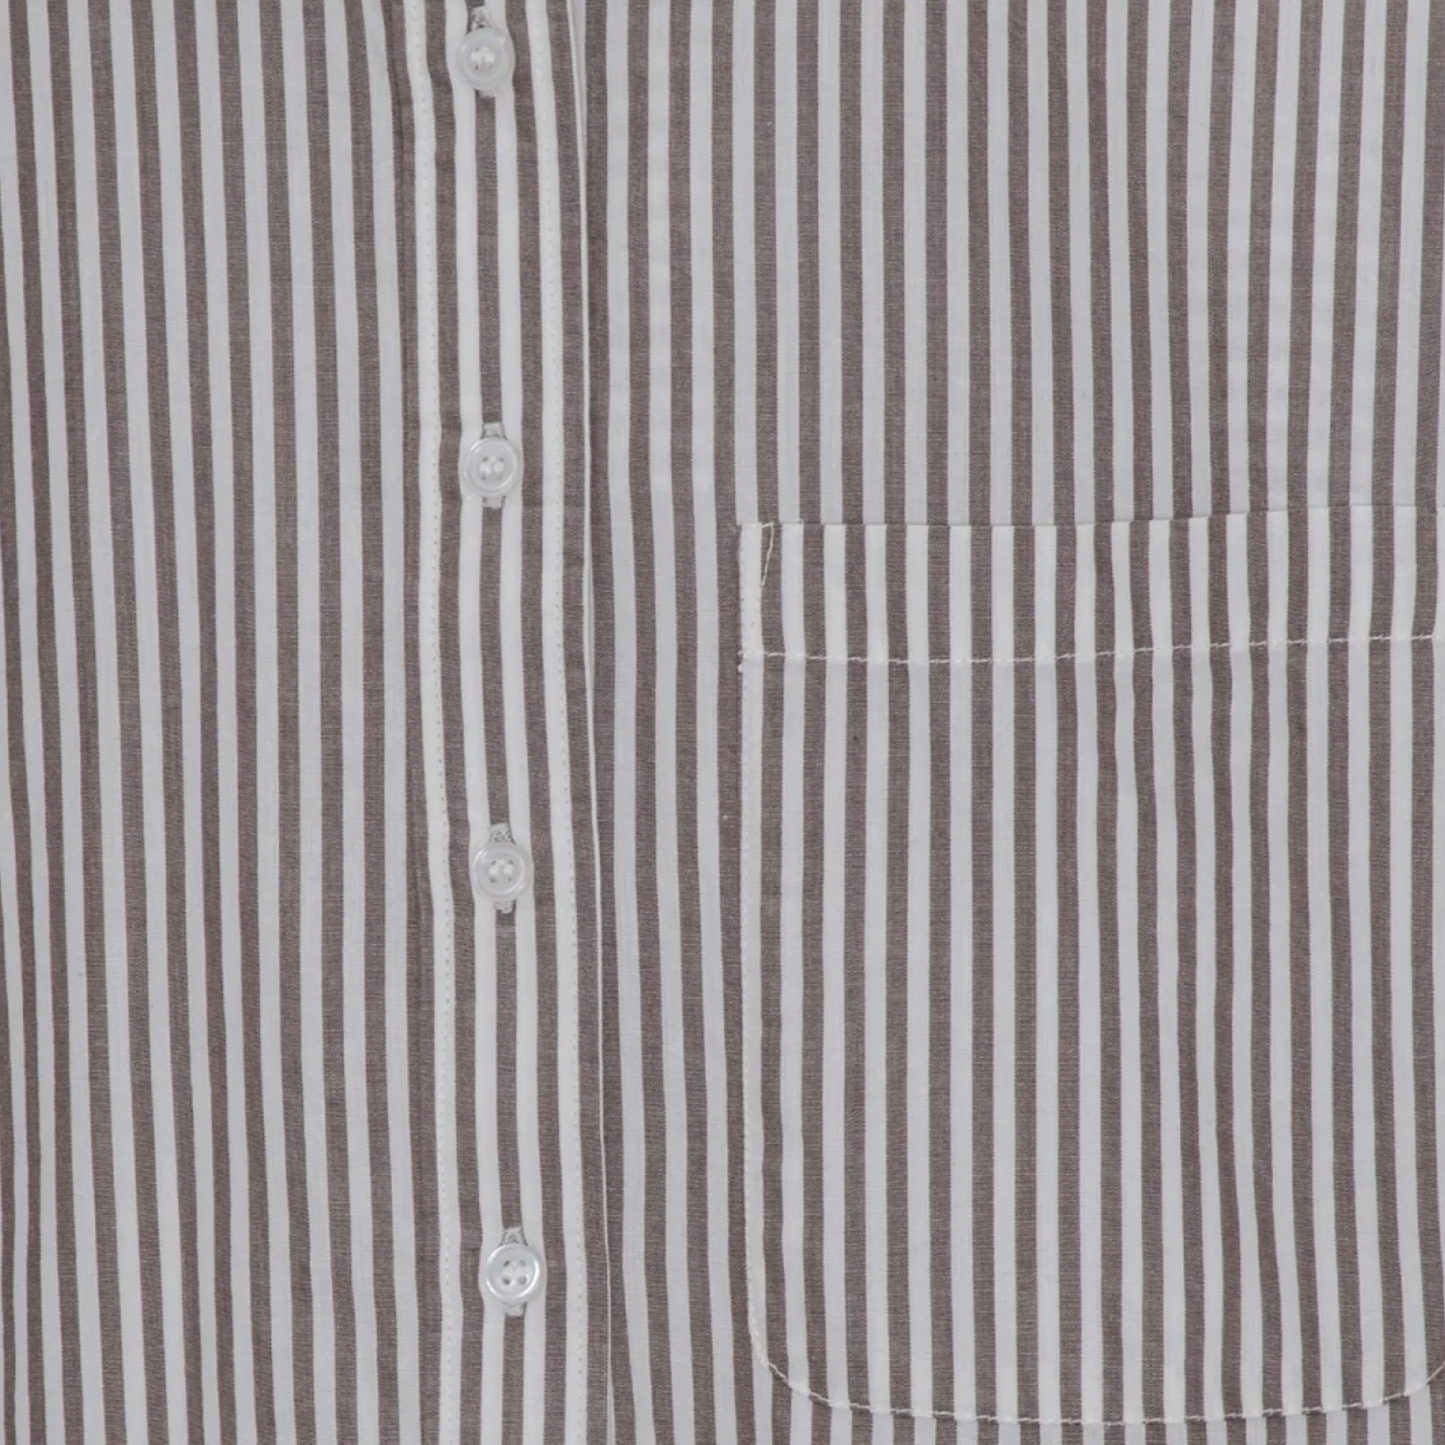 Relieve Stripe Skjortekjole, Dark Taupe/Ecru